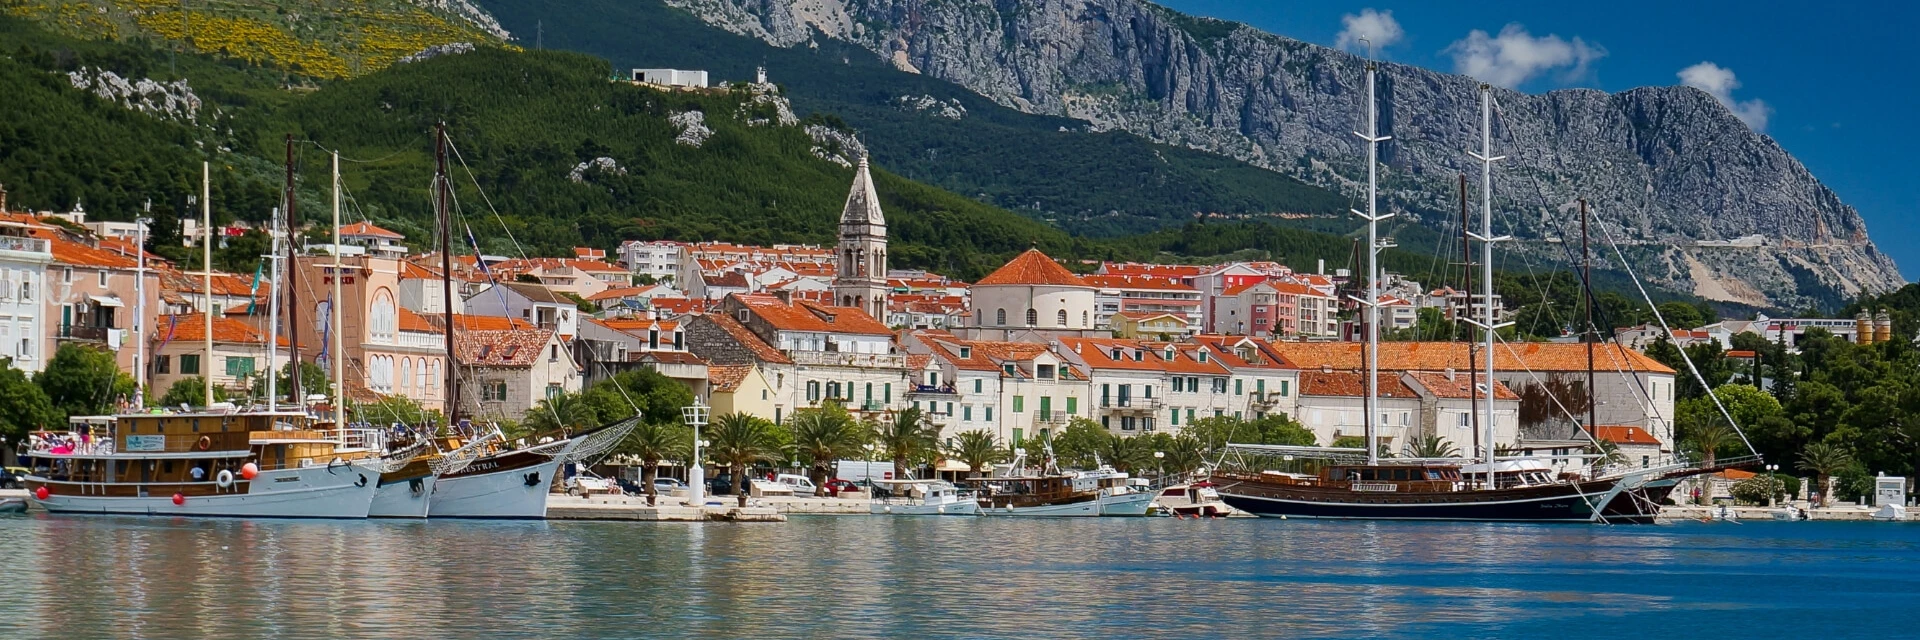 The greatest jewel of the Makarska Riviera